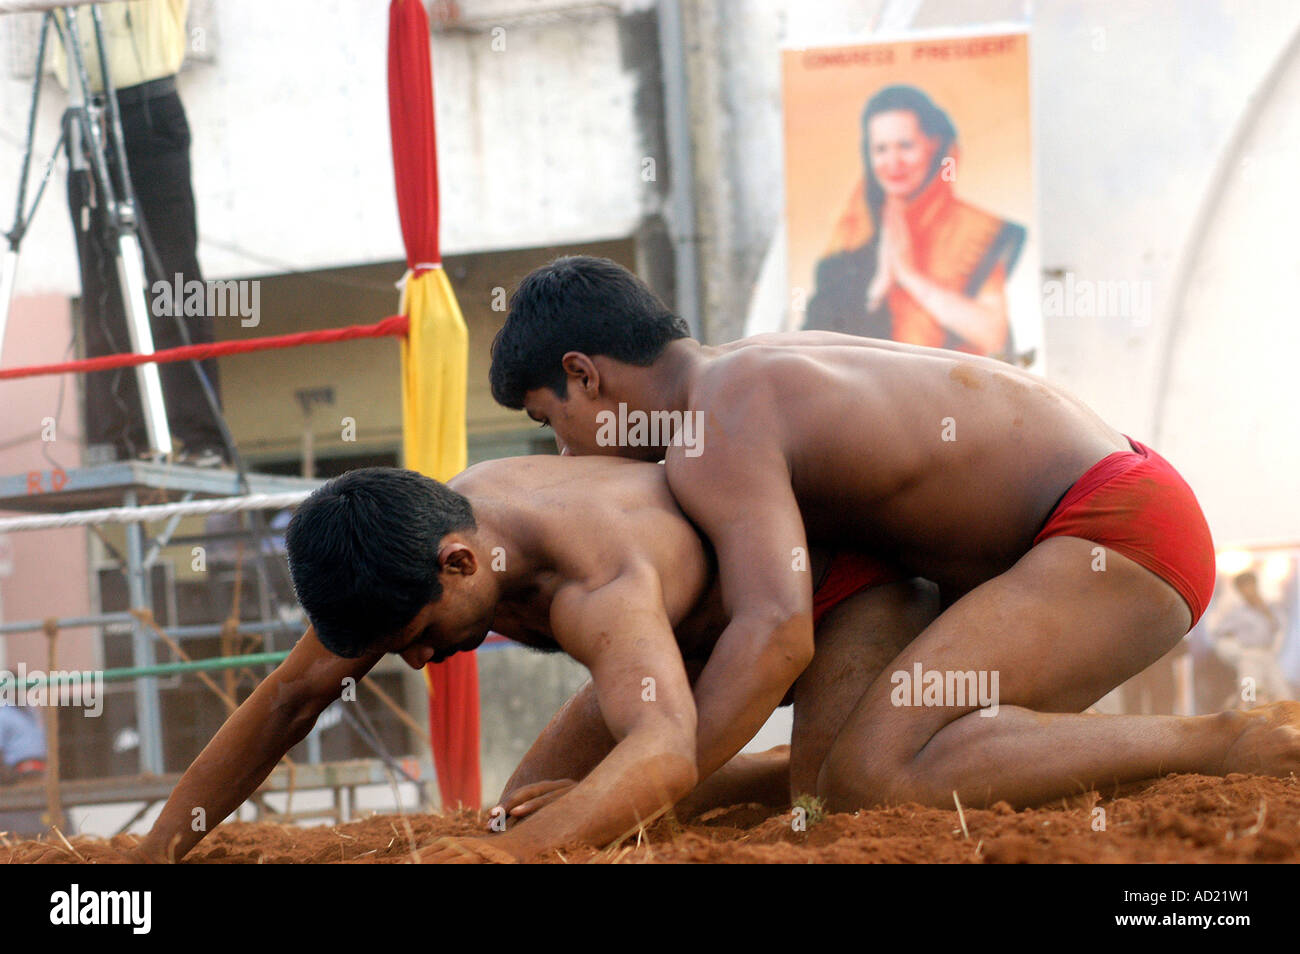 ASB73106 Two men grappling in wrestling sport Stock Photo